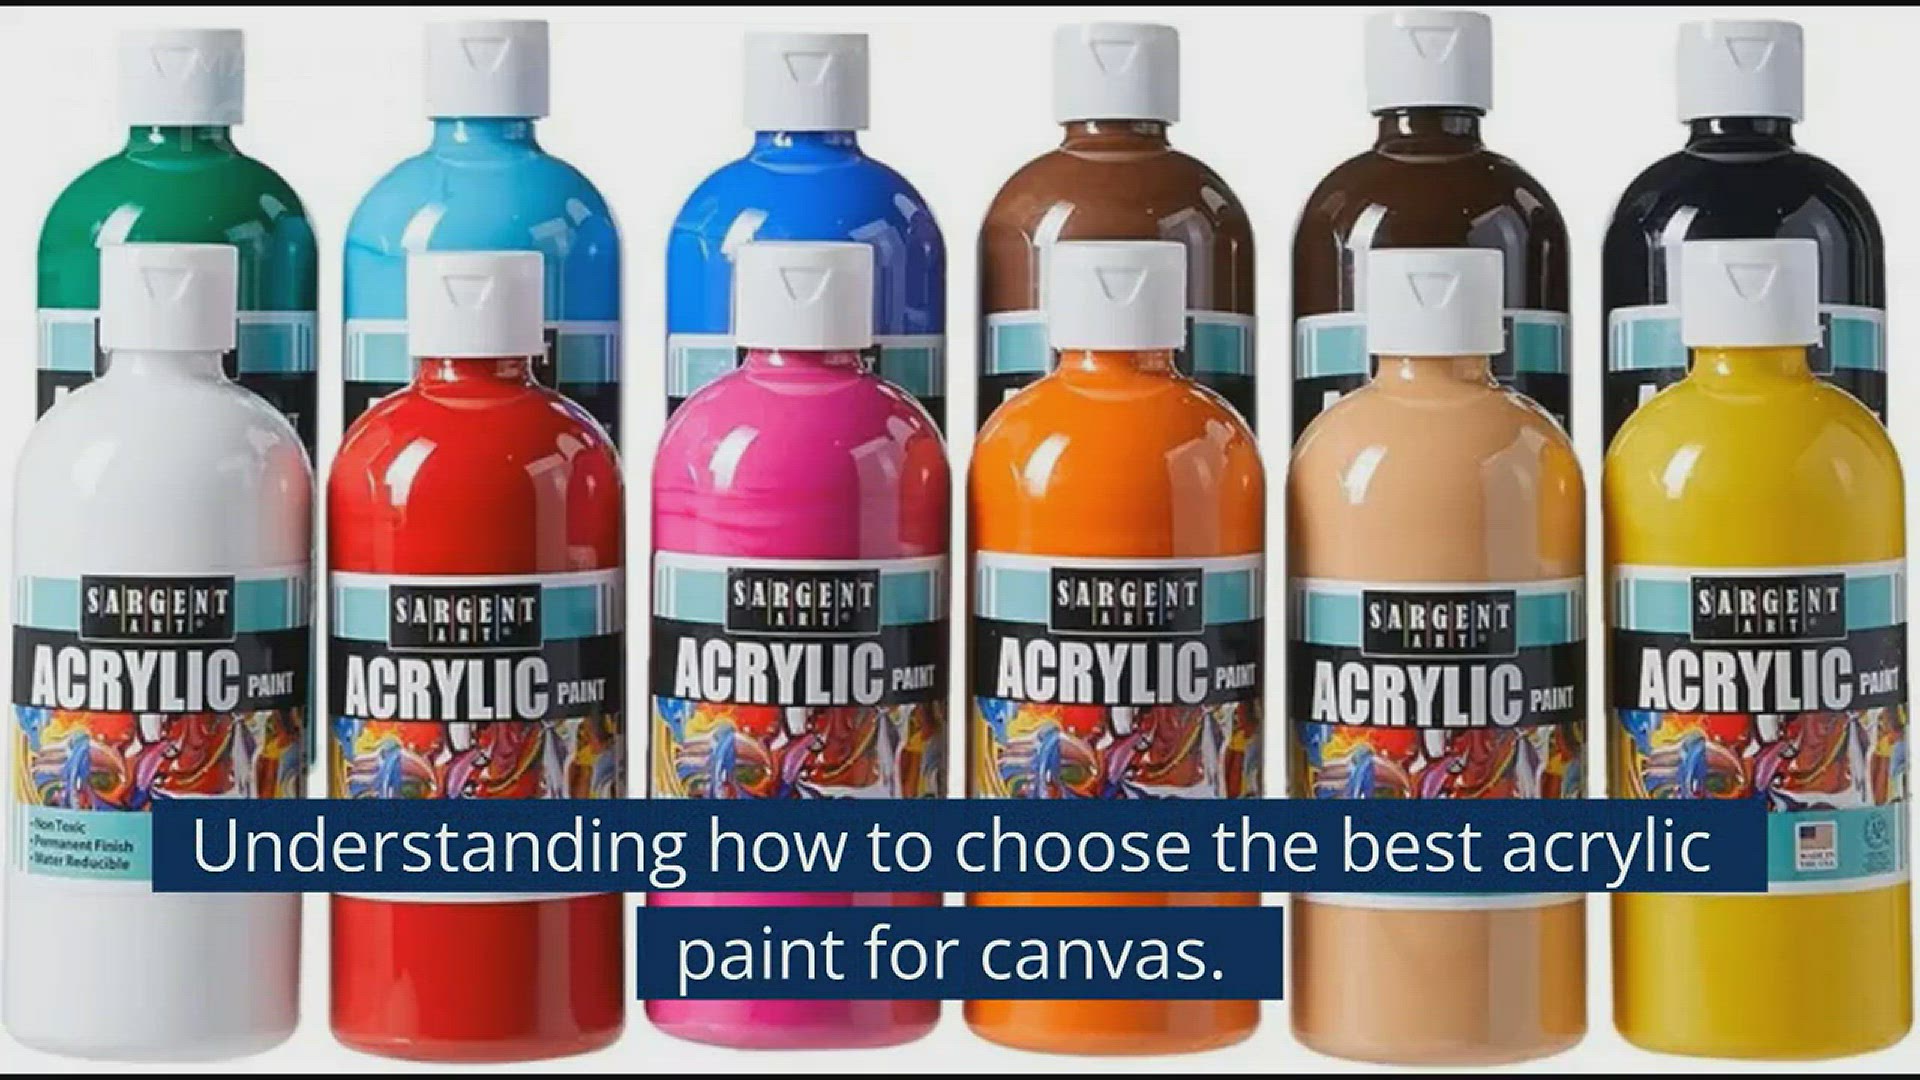 HA SHI (64 Colors) Non Toxic Soft Pastels Set for Professional